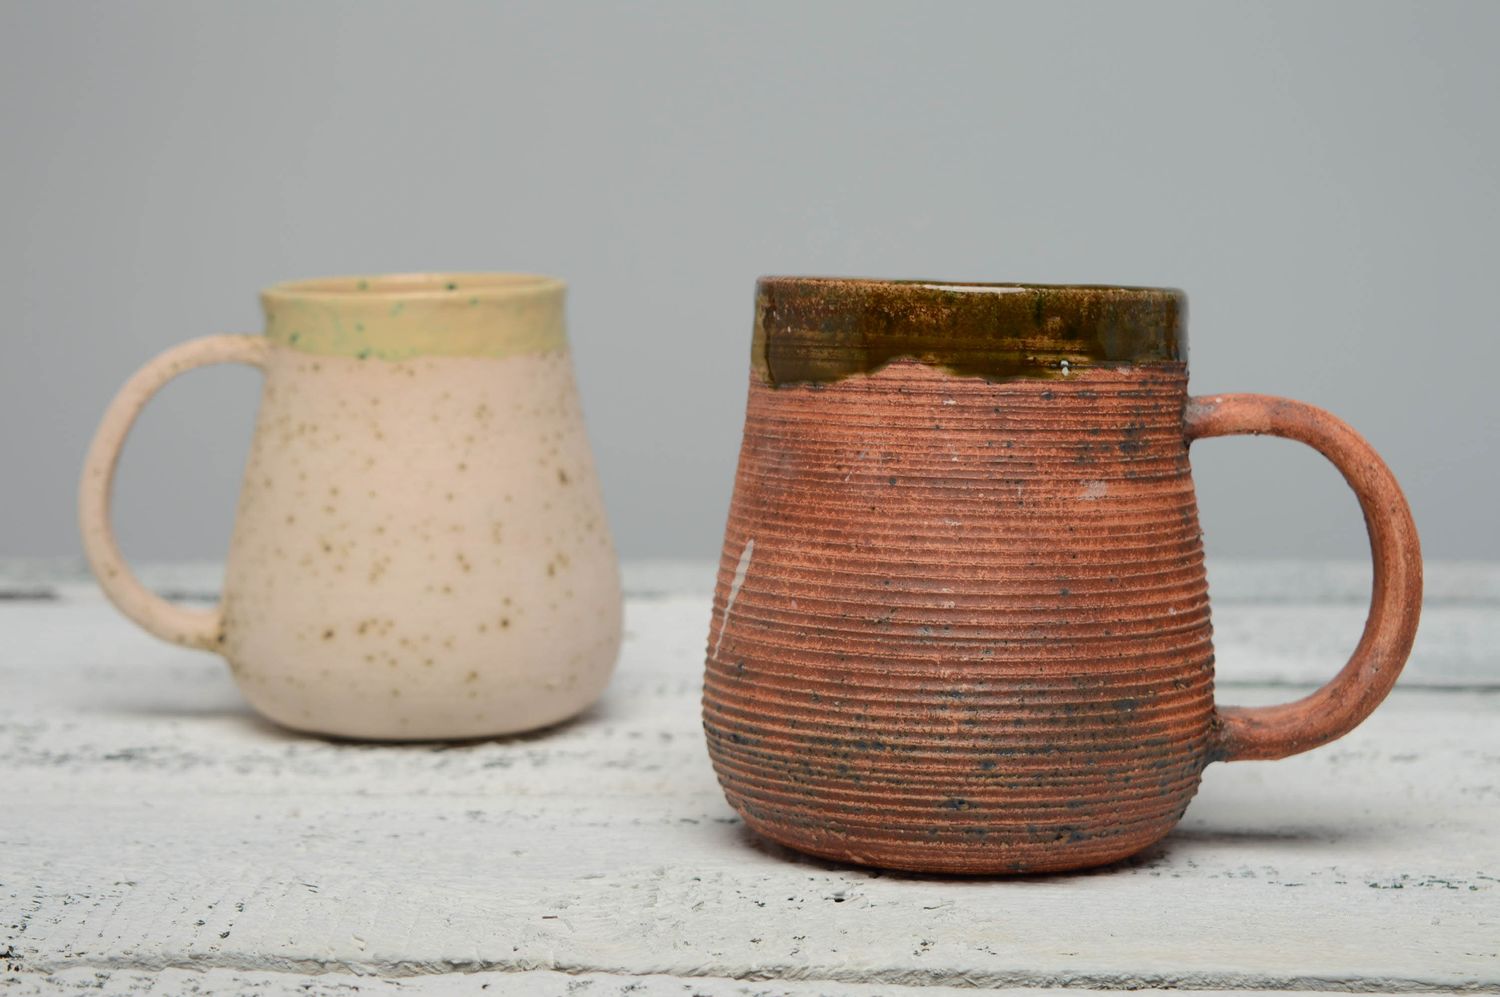 Giant 30 oz ceramic mug dor coffee, tea, beer with handle and rustic style photo 2